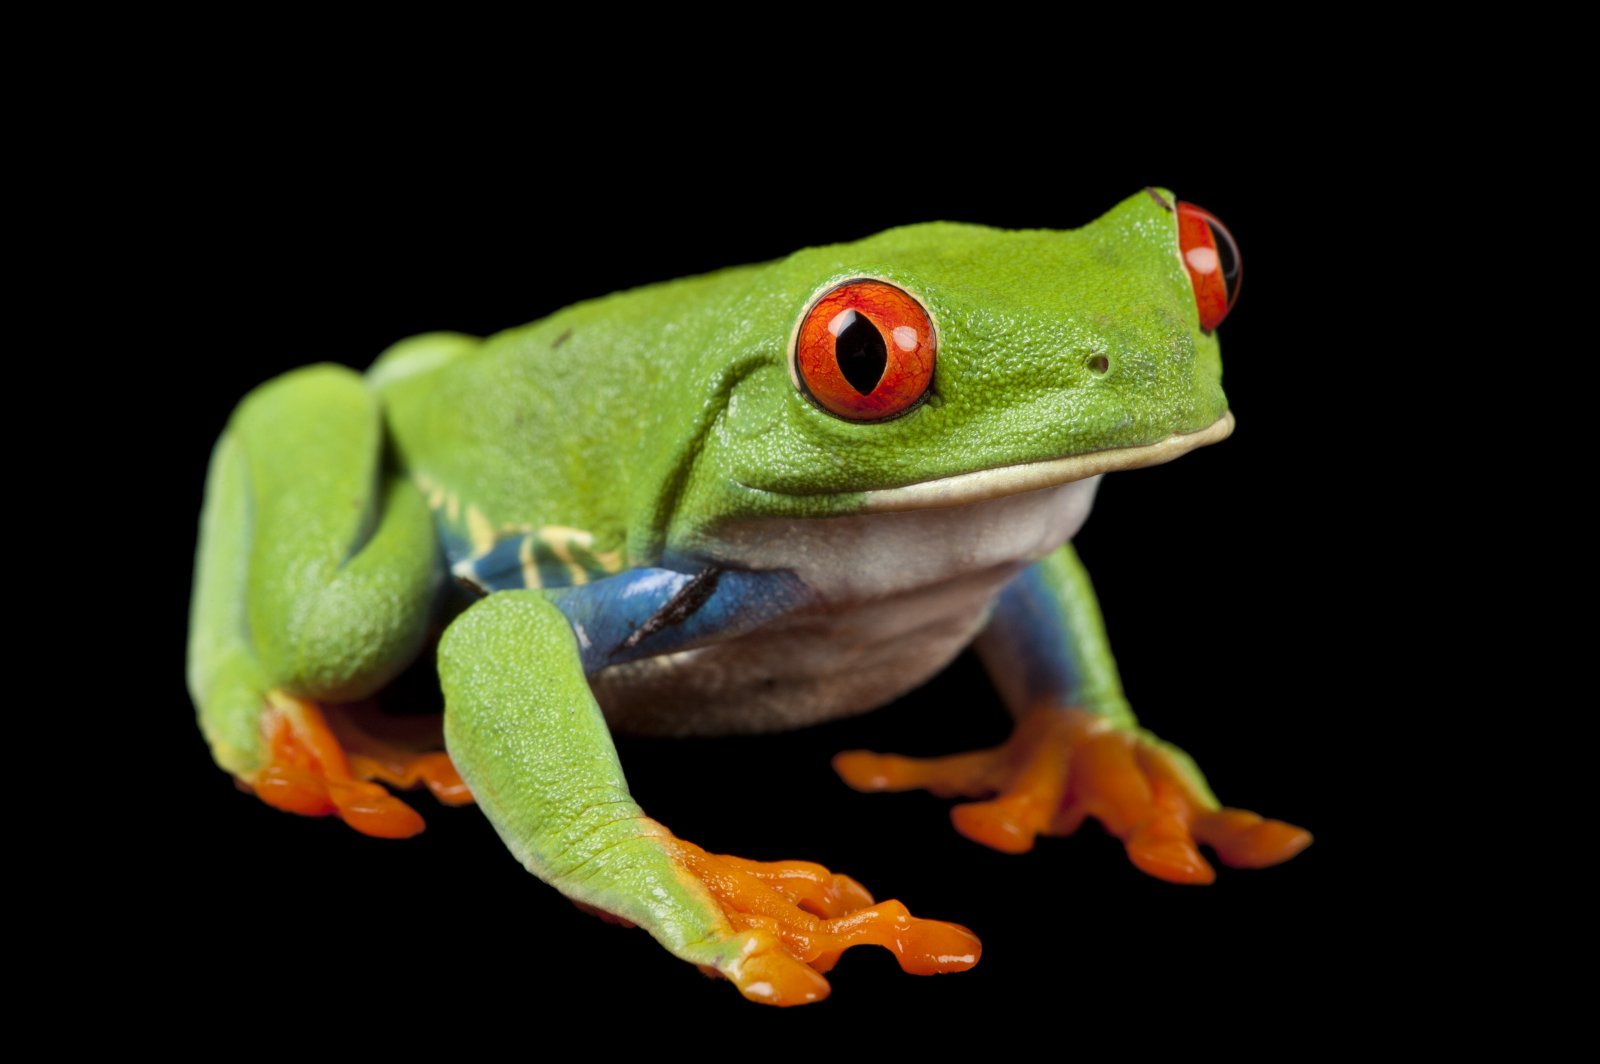 09 - Red eyed tree frog_cr Joel Sartore-National Geographic Photo Ark_1469131.jpg